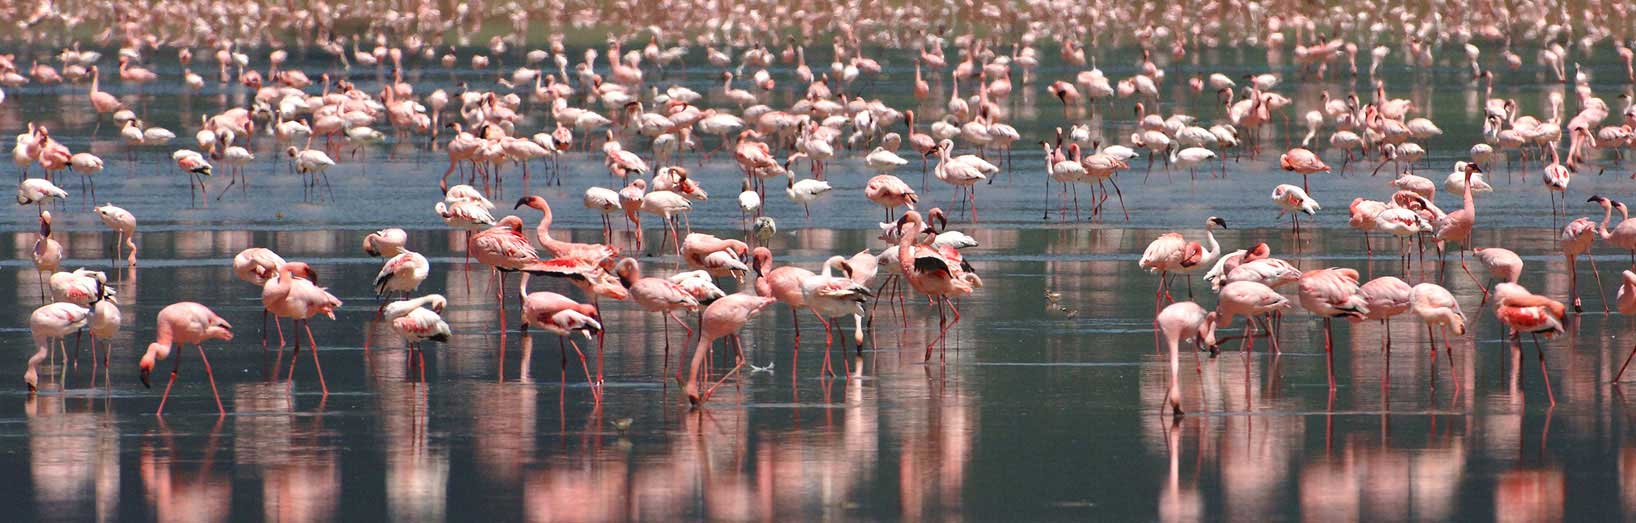 Flamingos in Tanzania.jpg